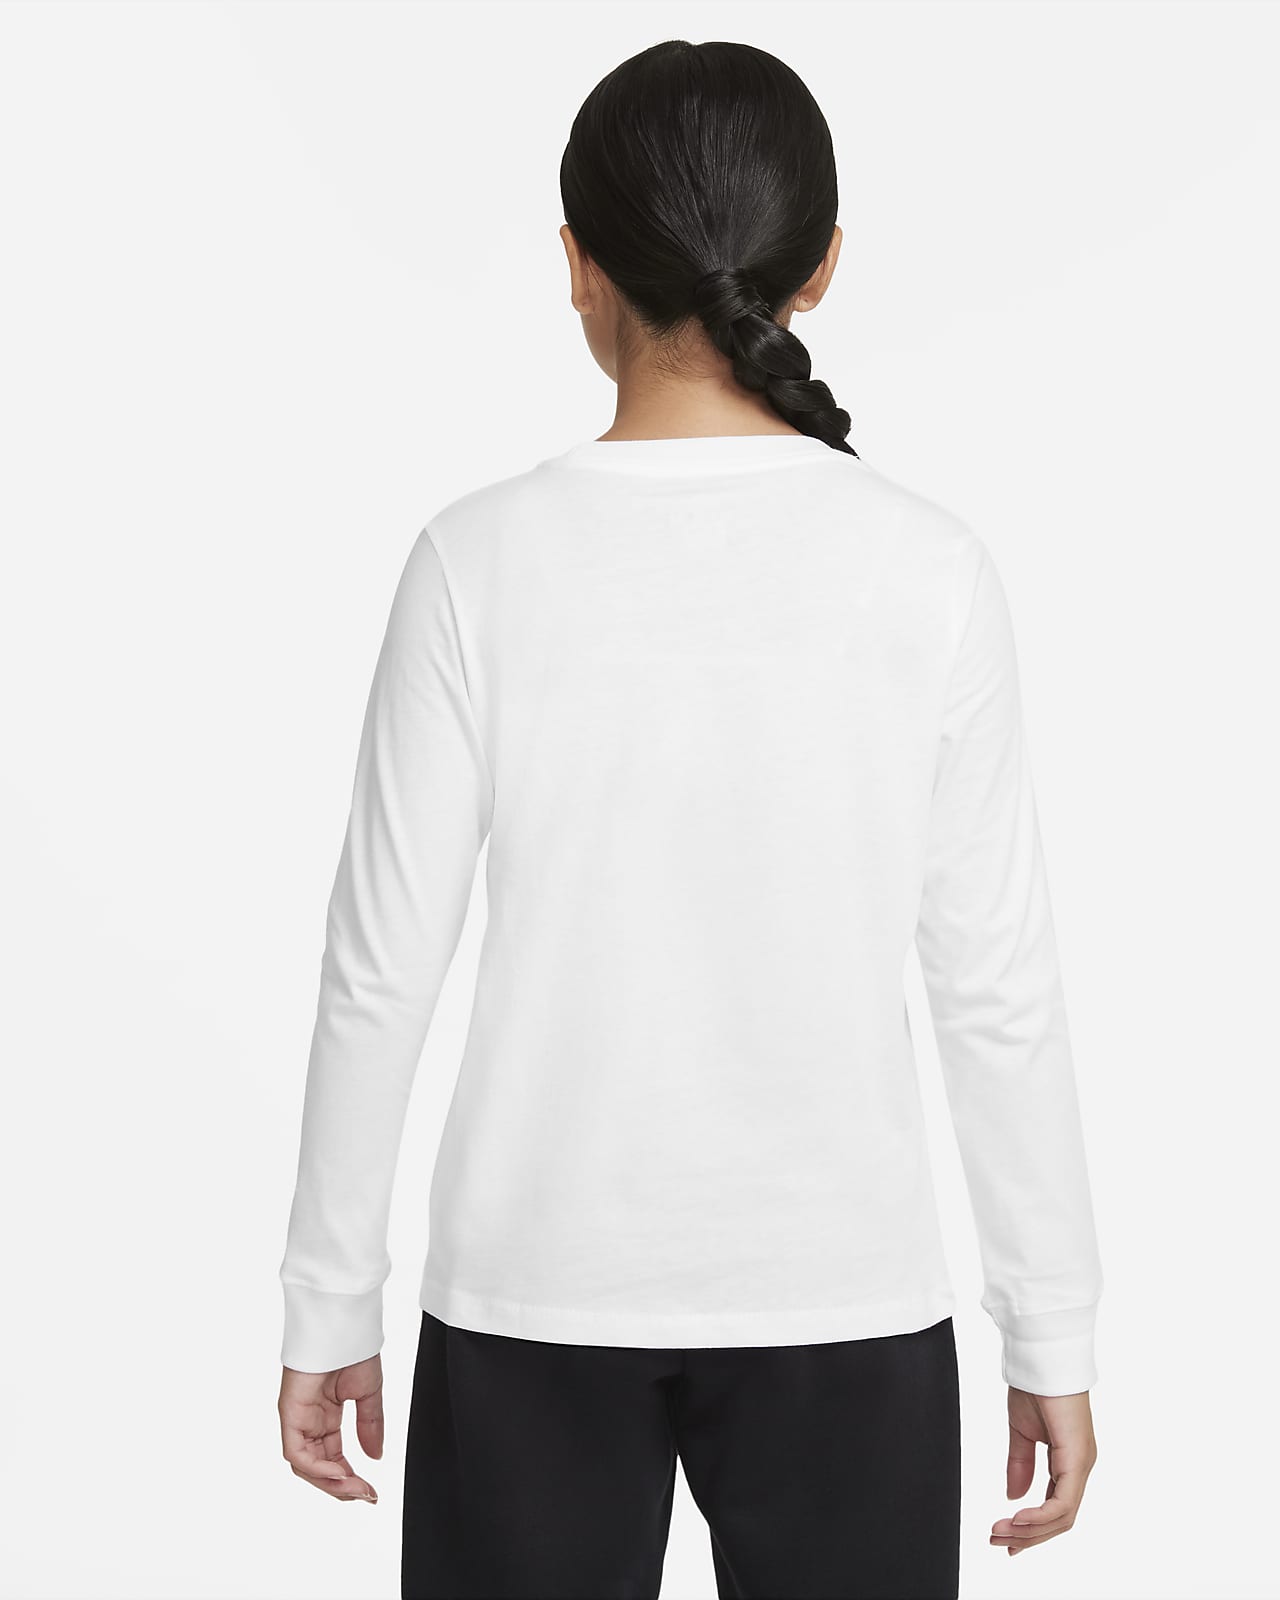 girls' long sleeved t-shirts white